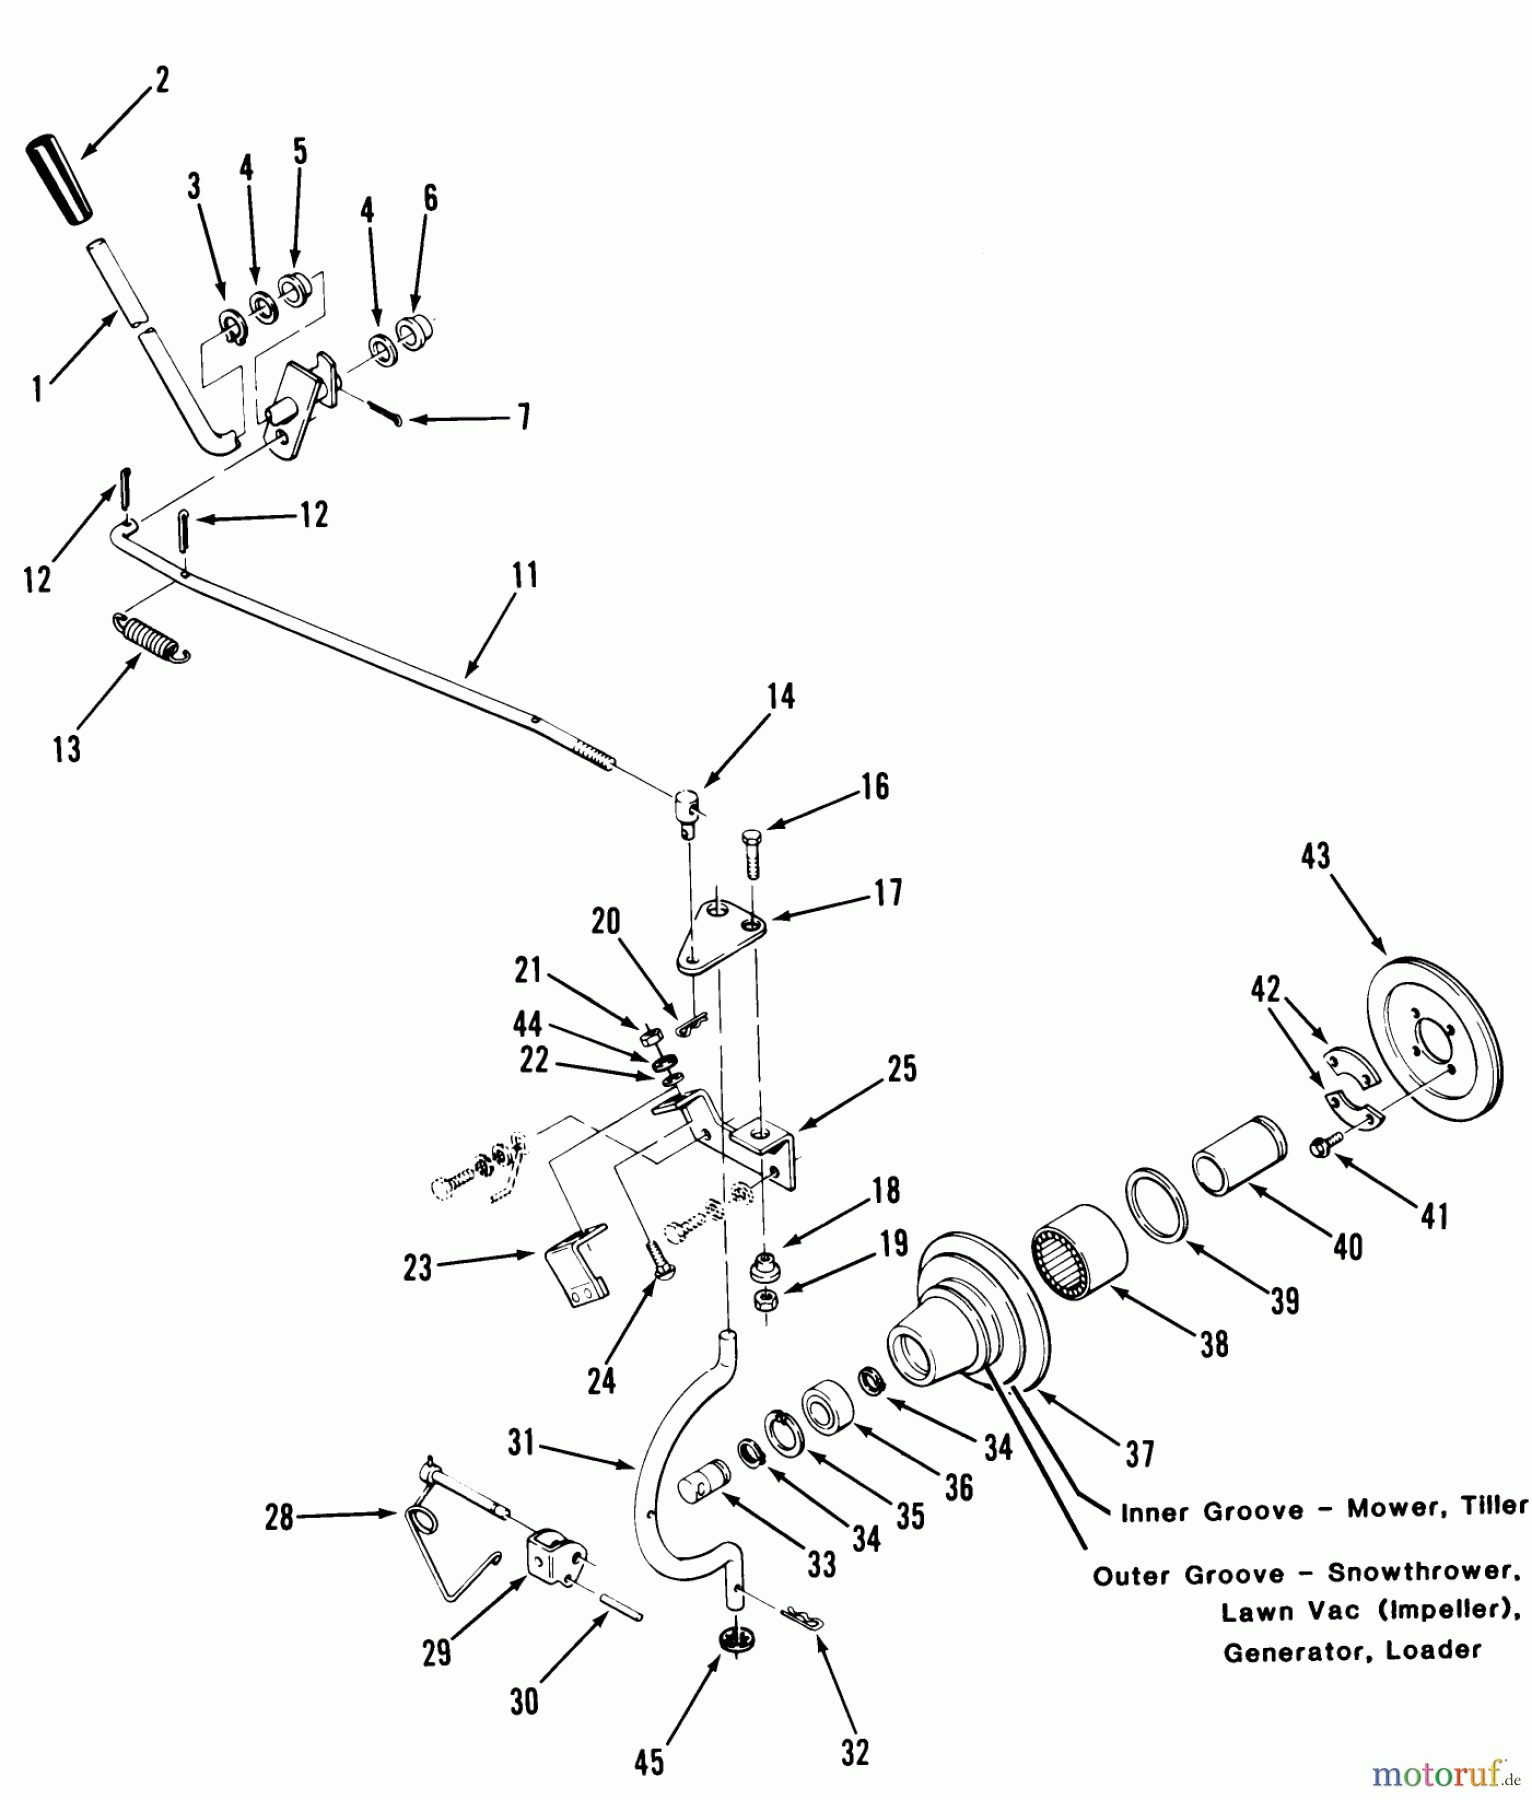  Toro Neu Mowers, Lawn & Garden Tractor Seite 2 A1-11B801 (GT-1100) - Toro GT-1100 8-Speed Tractor, 1984 PTO CLUTCH AND CONTROL